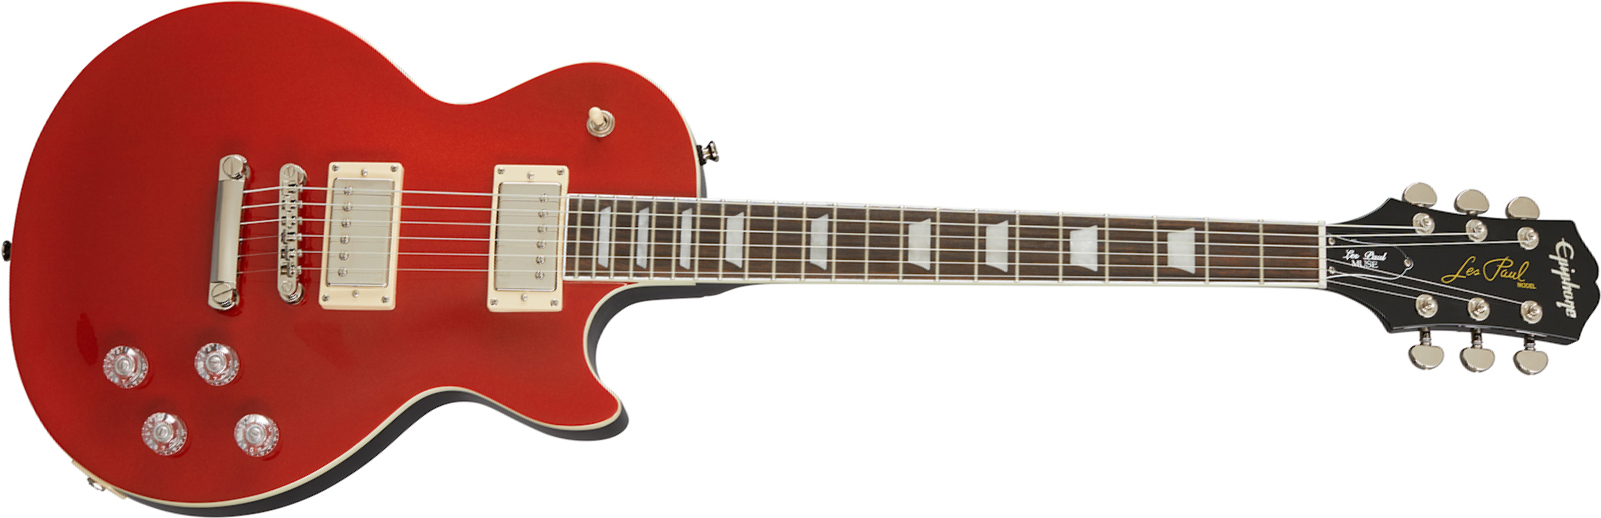 Epiphone Les Paul Muse Modern 2h Ht Lau - Scarlet Red Metallic - Guitarra eléctrica de corte único. - Main picture